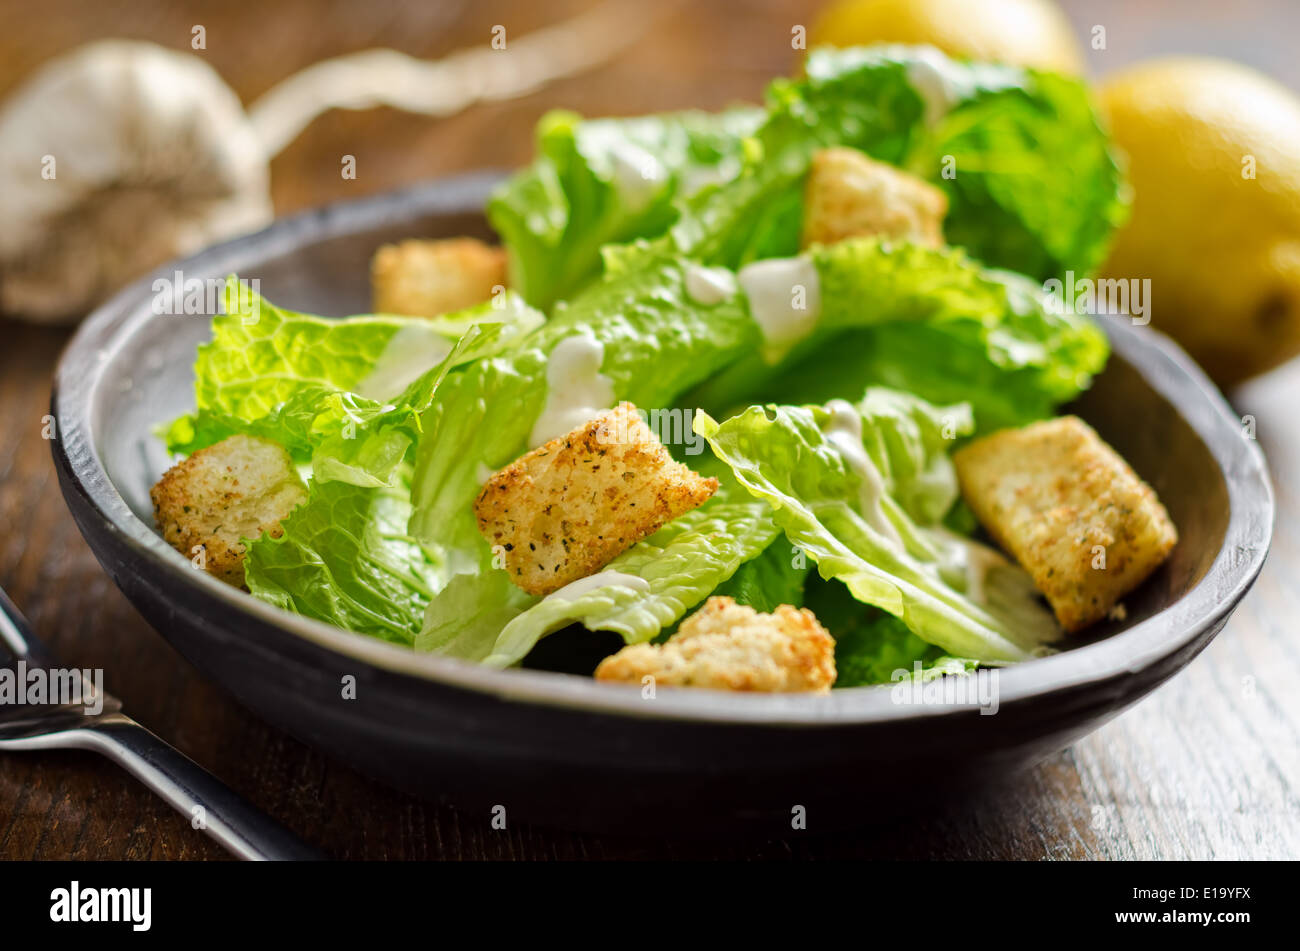 A crispy caesar salad with romaine lettuce, croutons, lemon, and garlic. Stock Photo